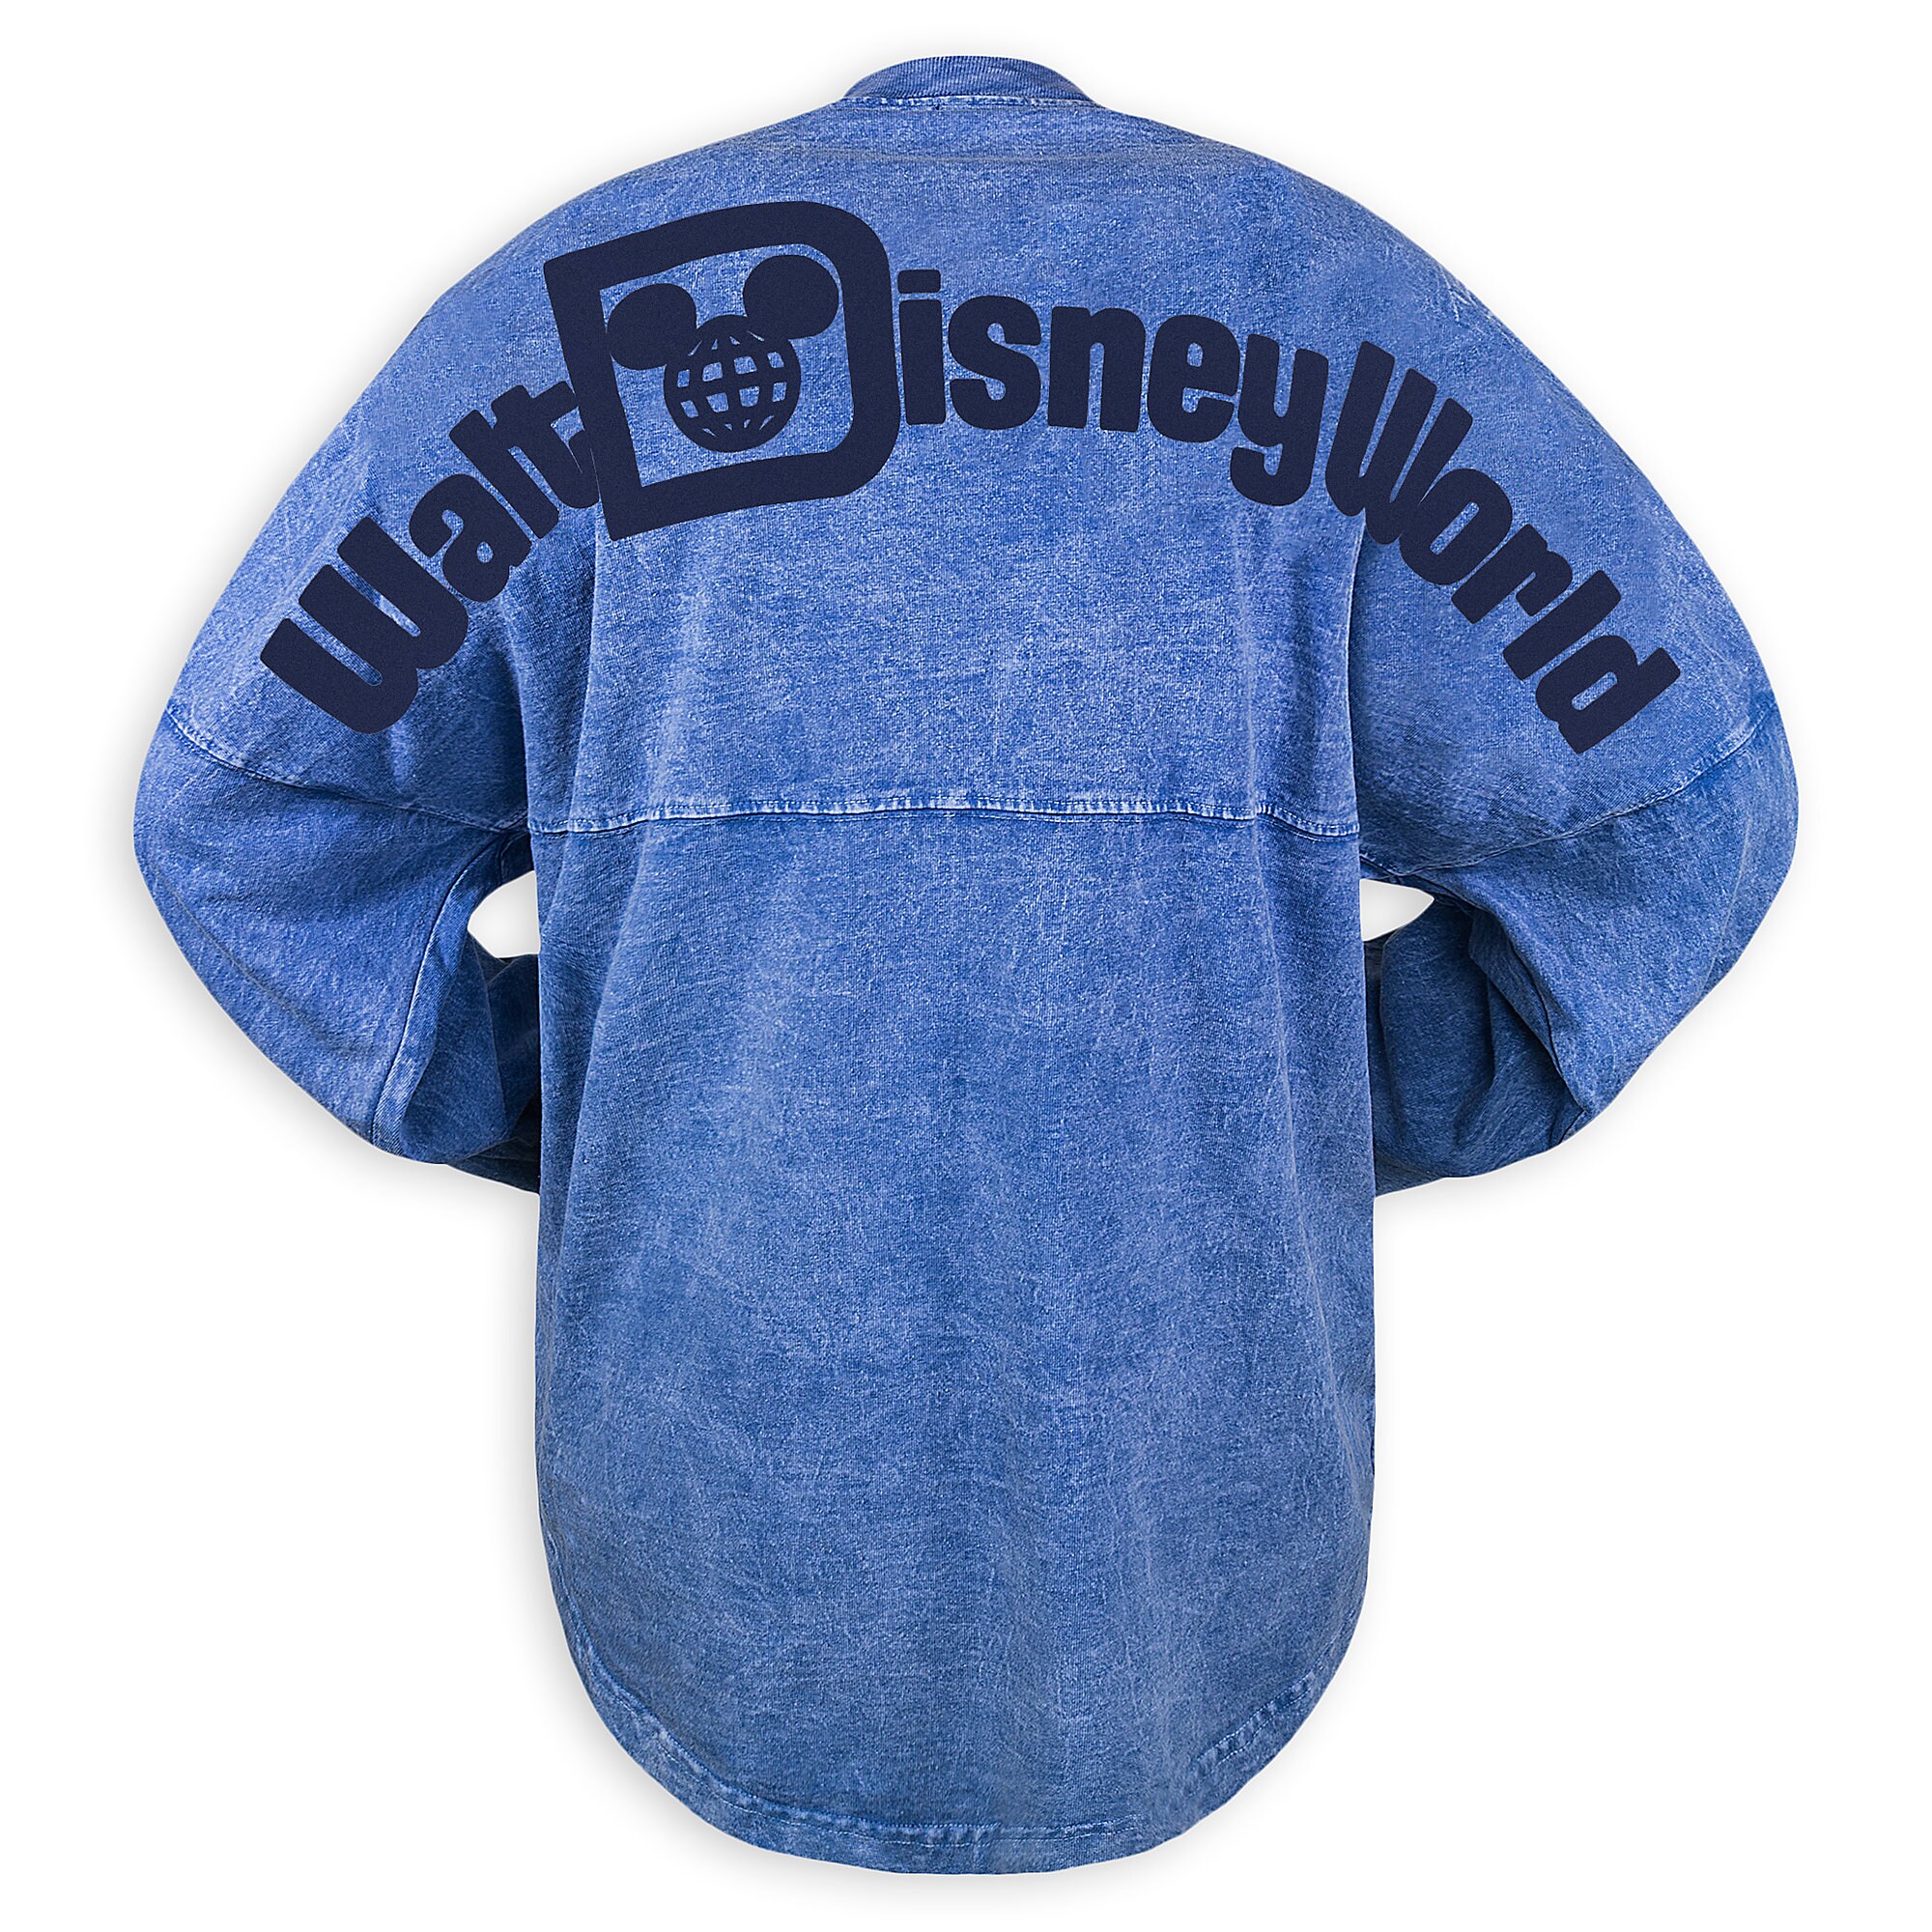 Walt Disney World Mineral Wash Spirit Jersey for Adults - Blue